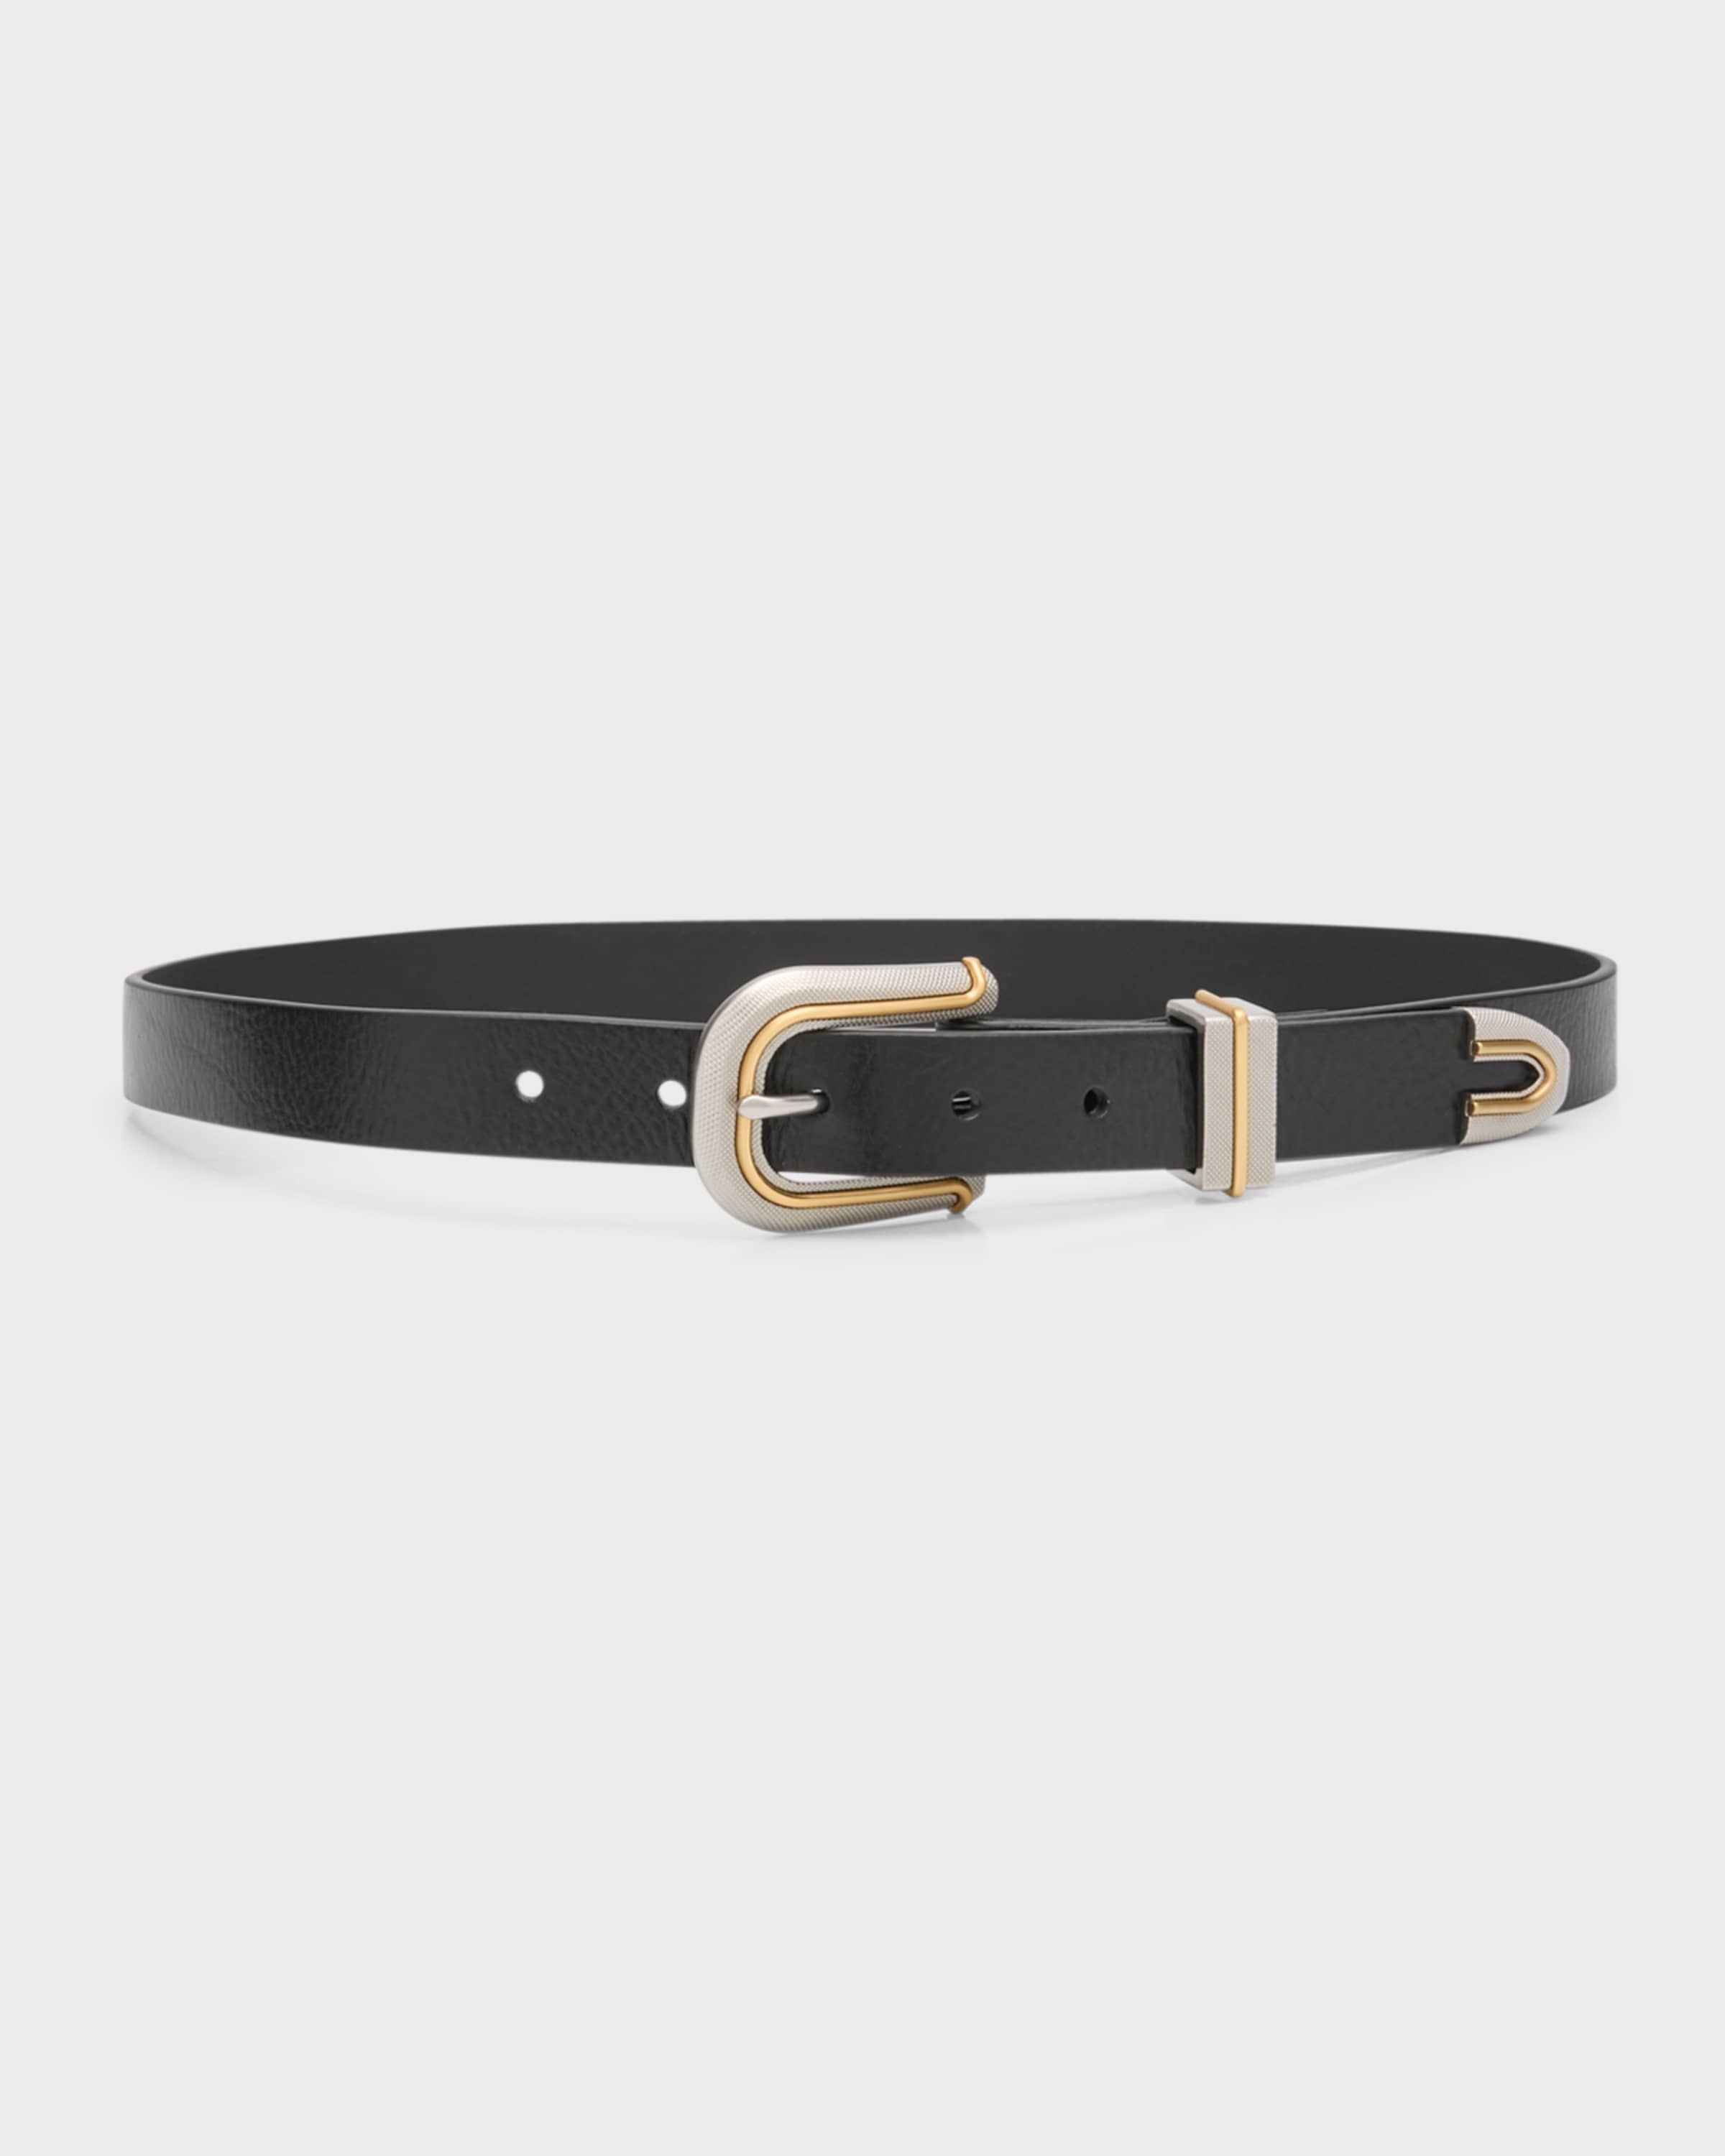 Ventura Leather & Nickel Belt - 1